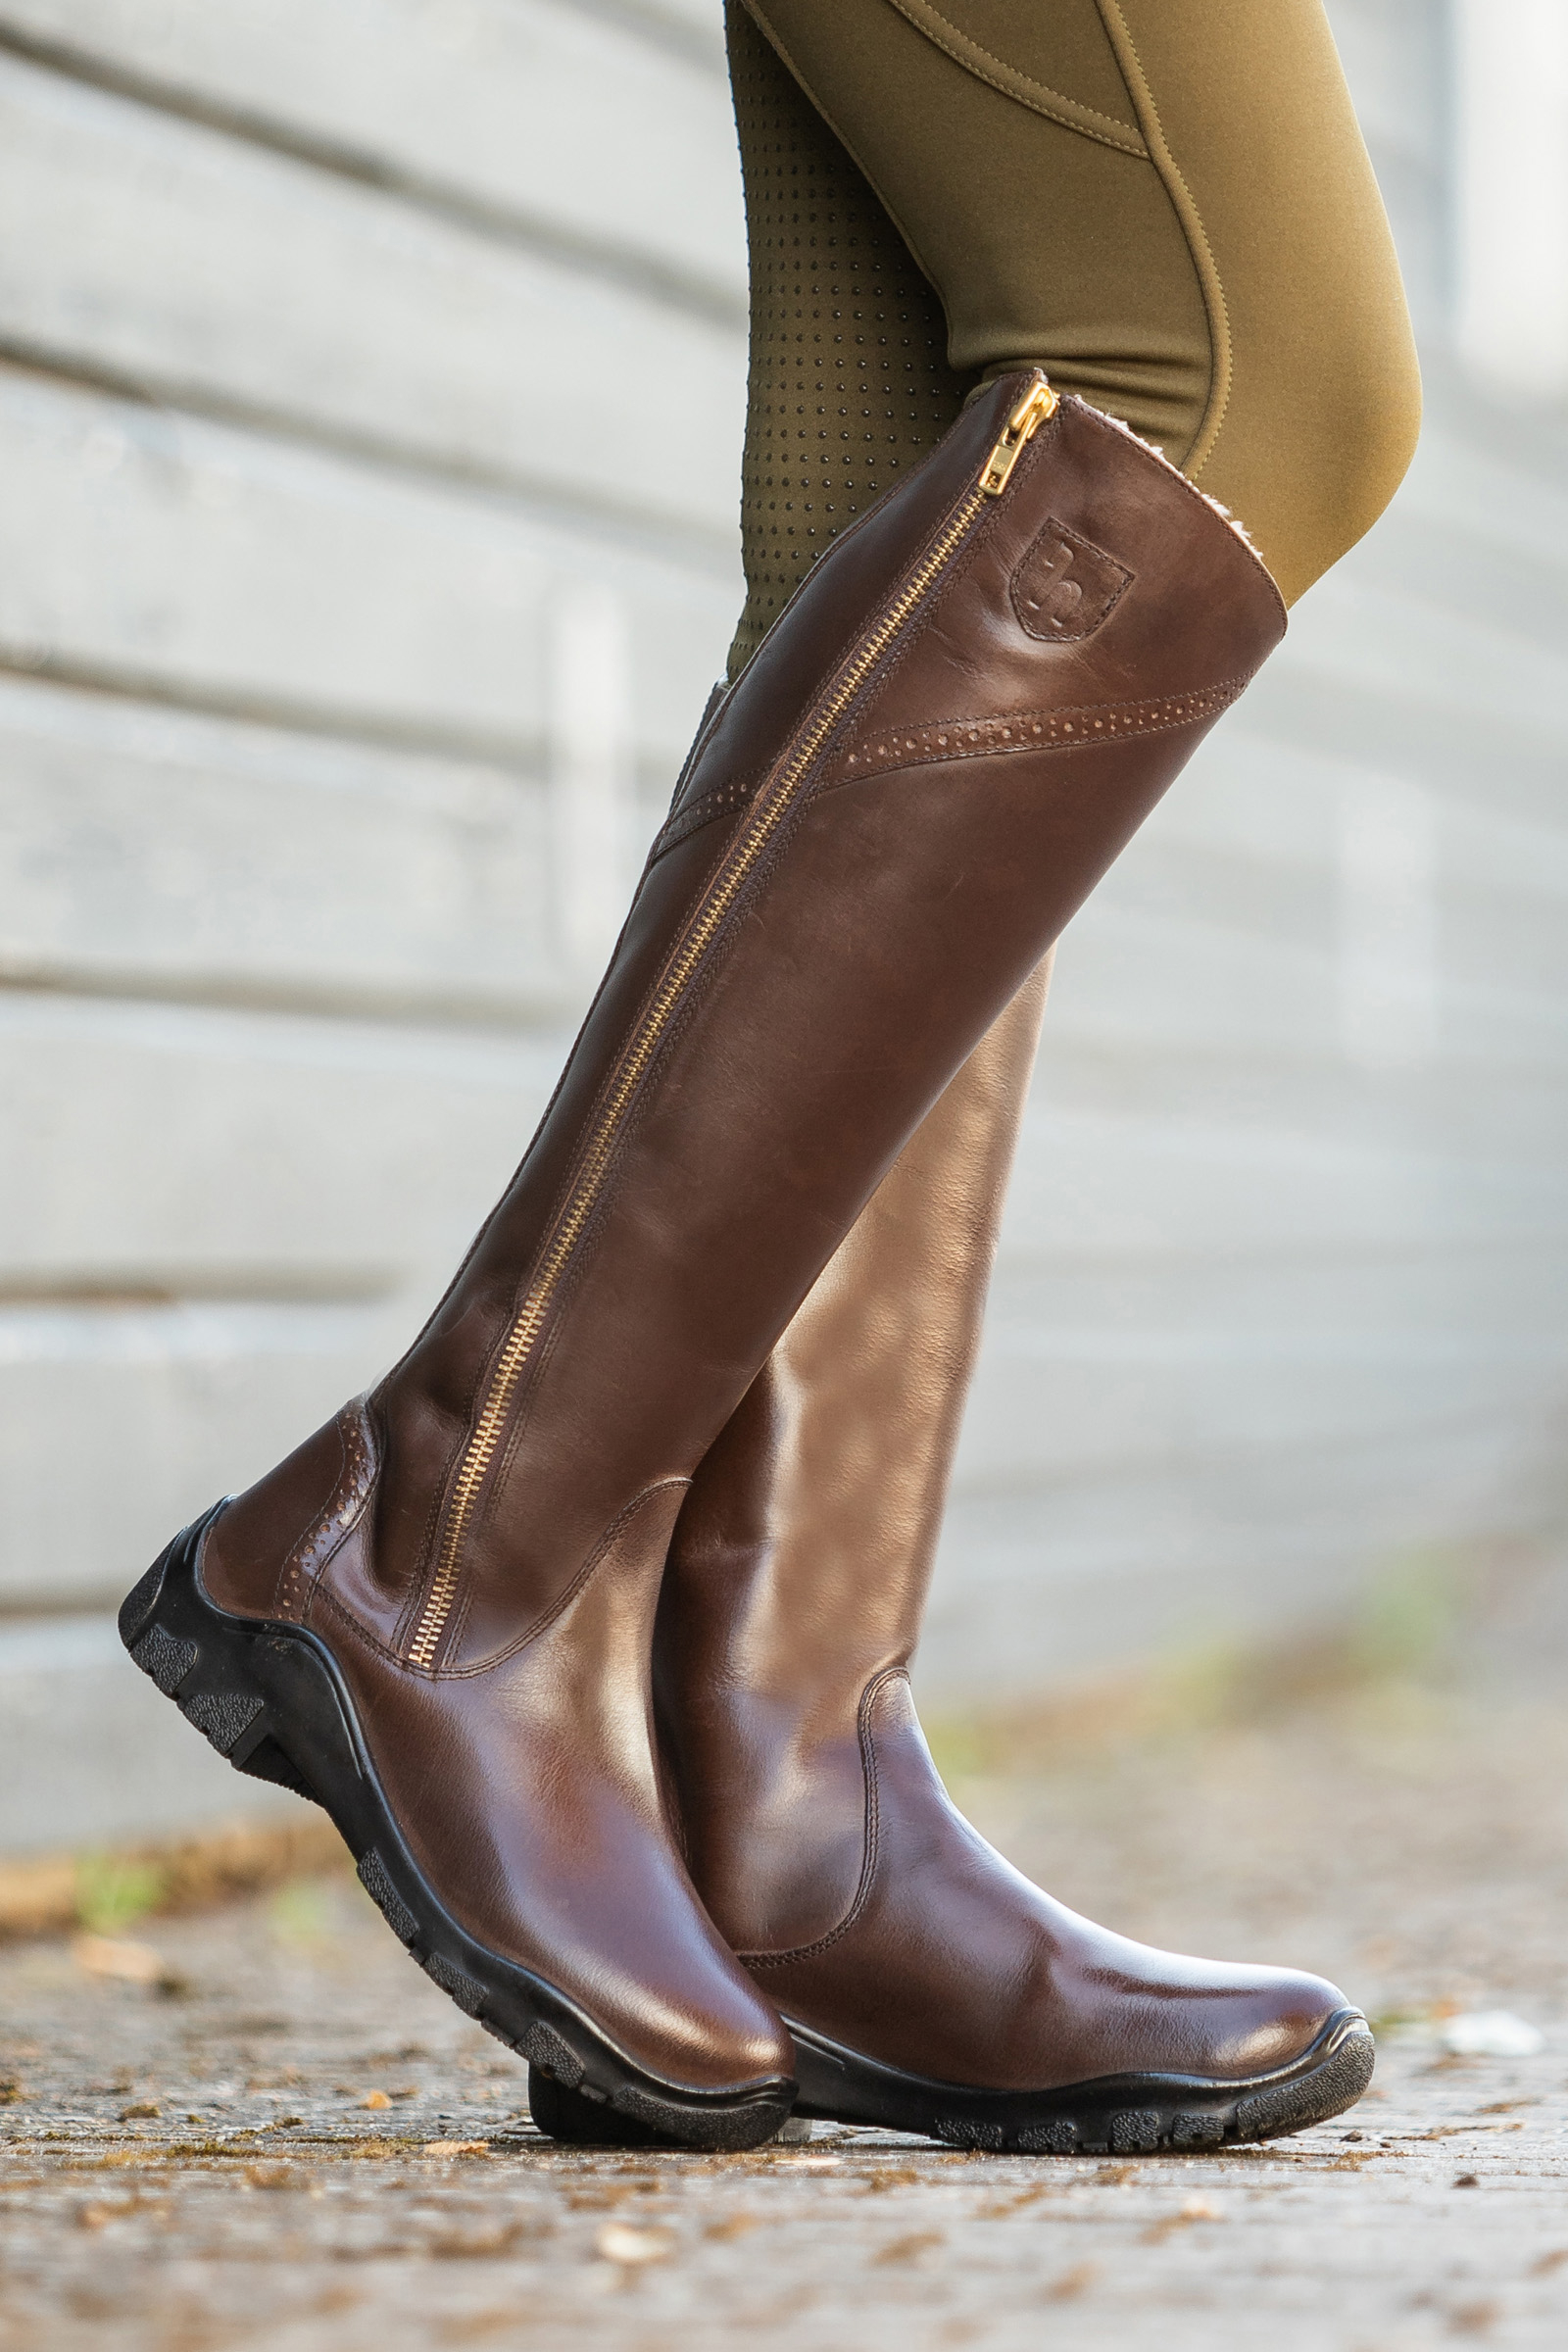 Buy Horze Aspen Women's Winter Tall Boots